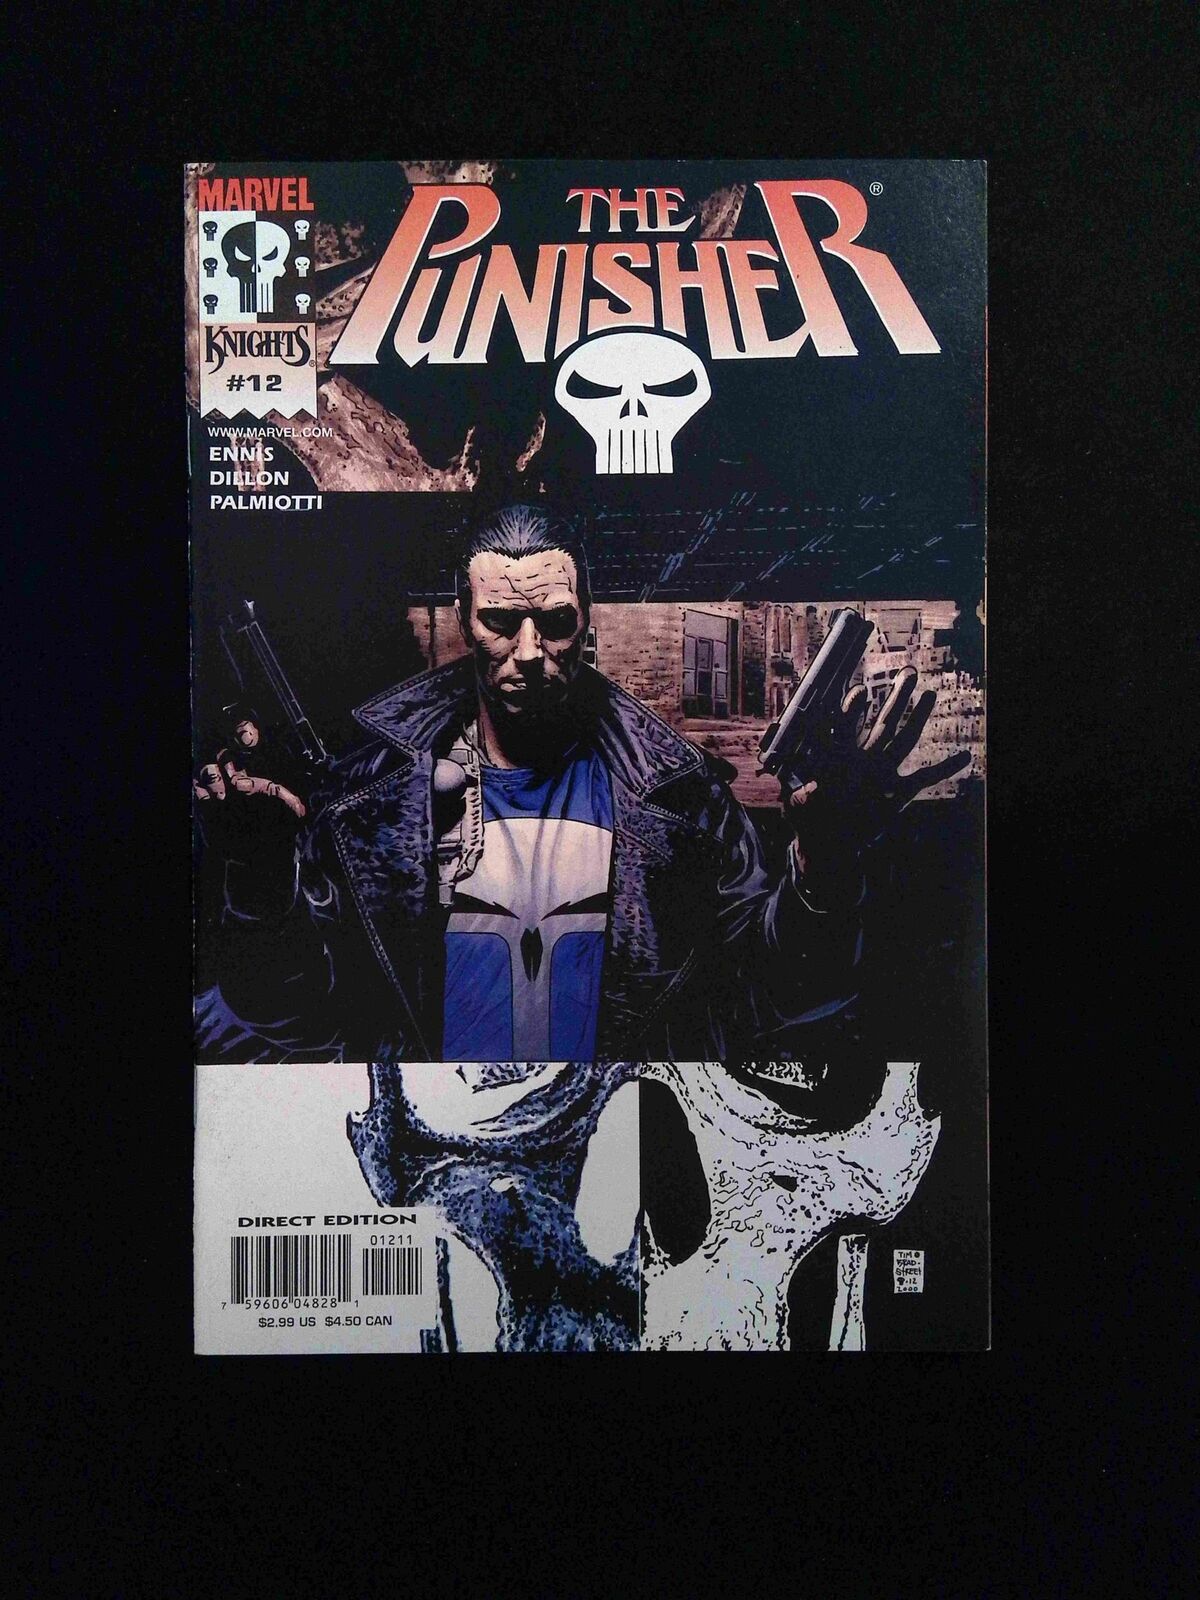 Punisher #12 (5TH SERIES) MARVEL Comics 2001 VF+